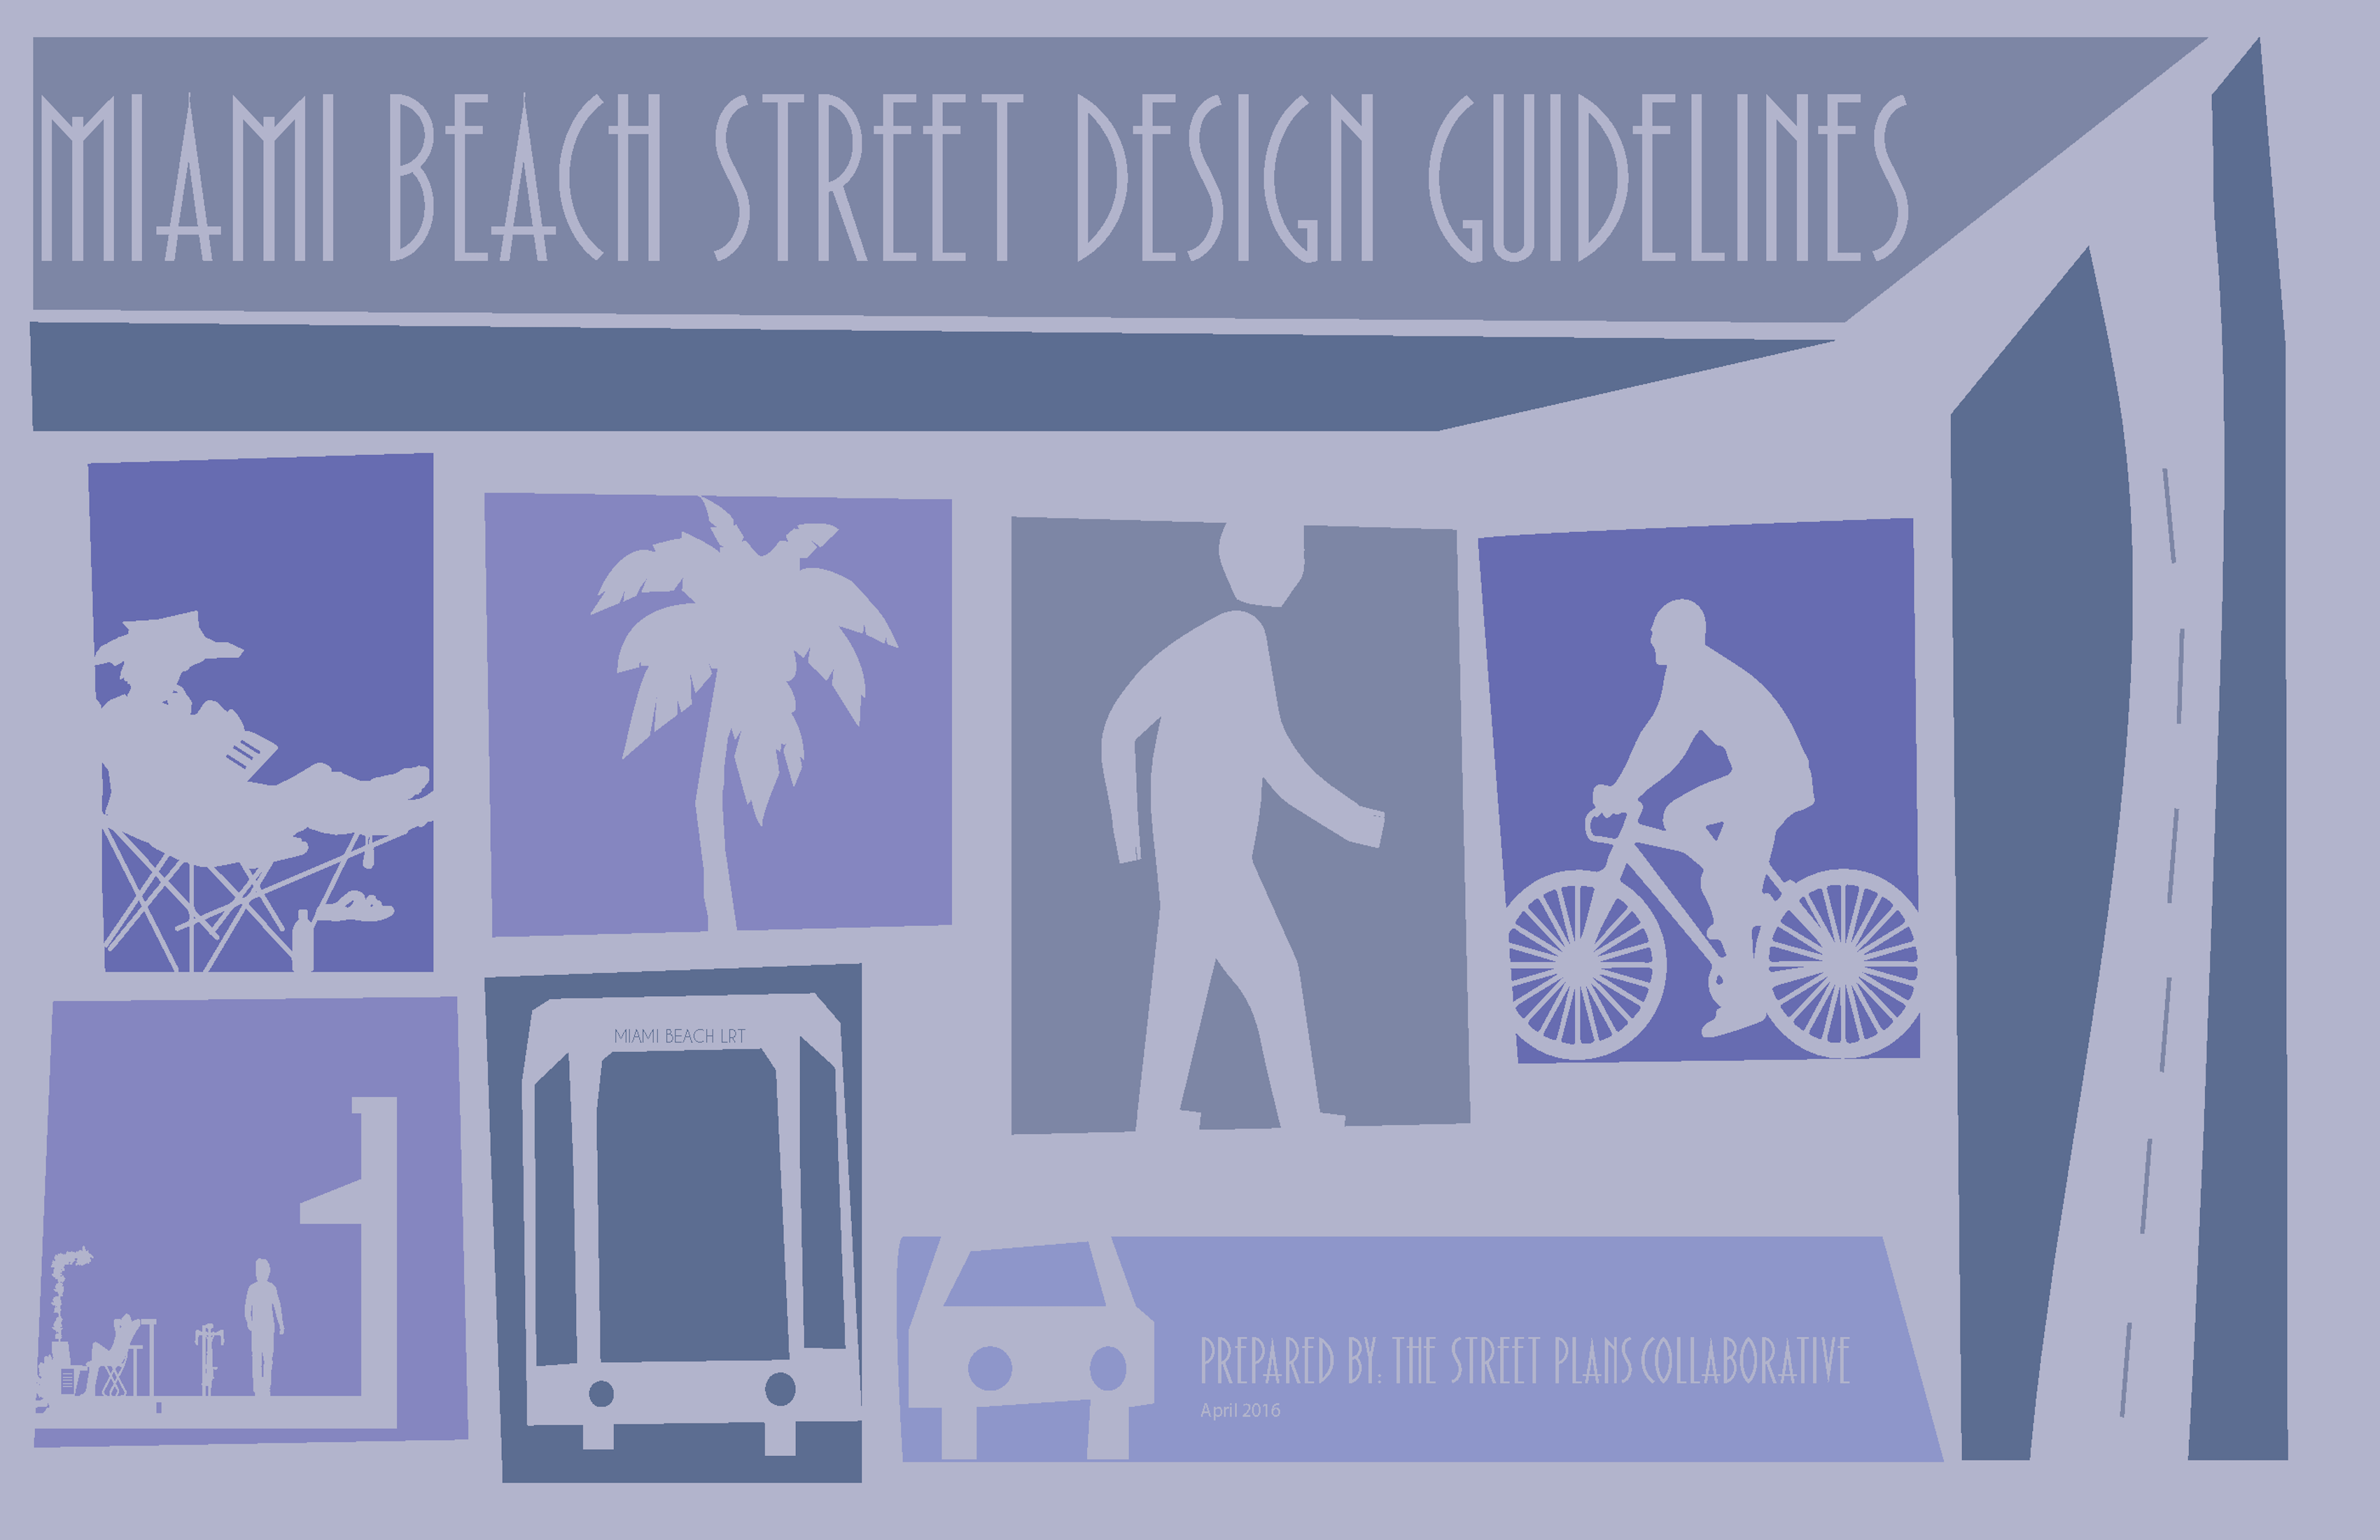 Street Design Guidelines